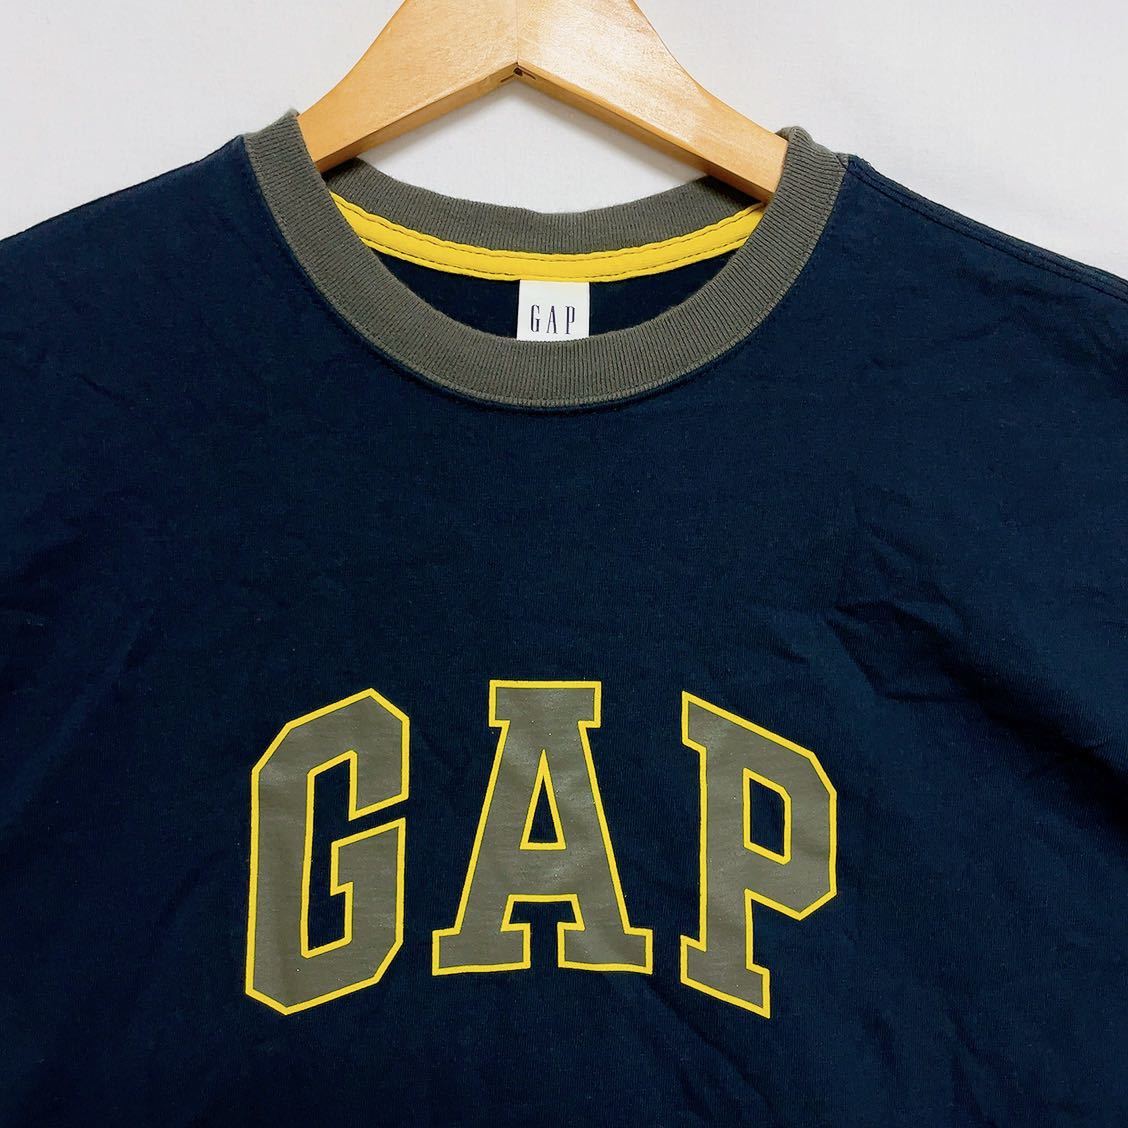 00s Old Gap Old Gap Lynn ga- футболка б/у одежда 